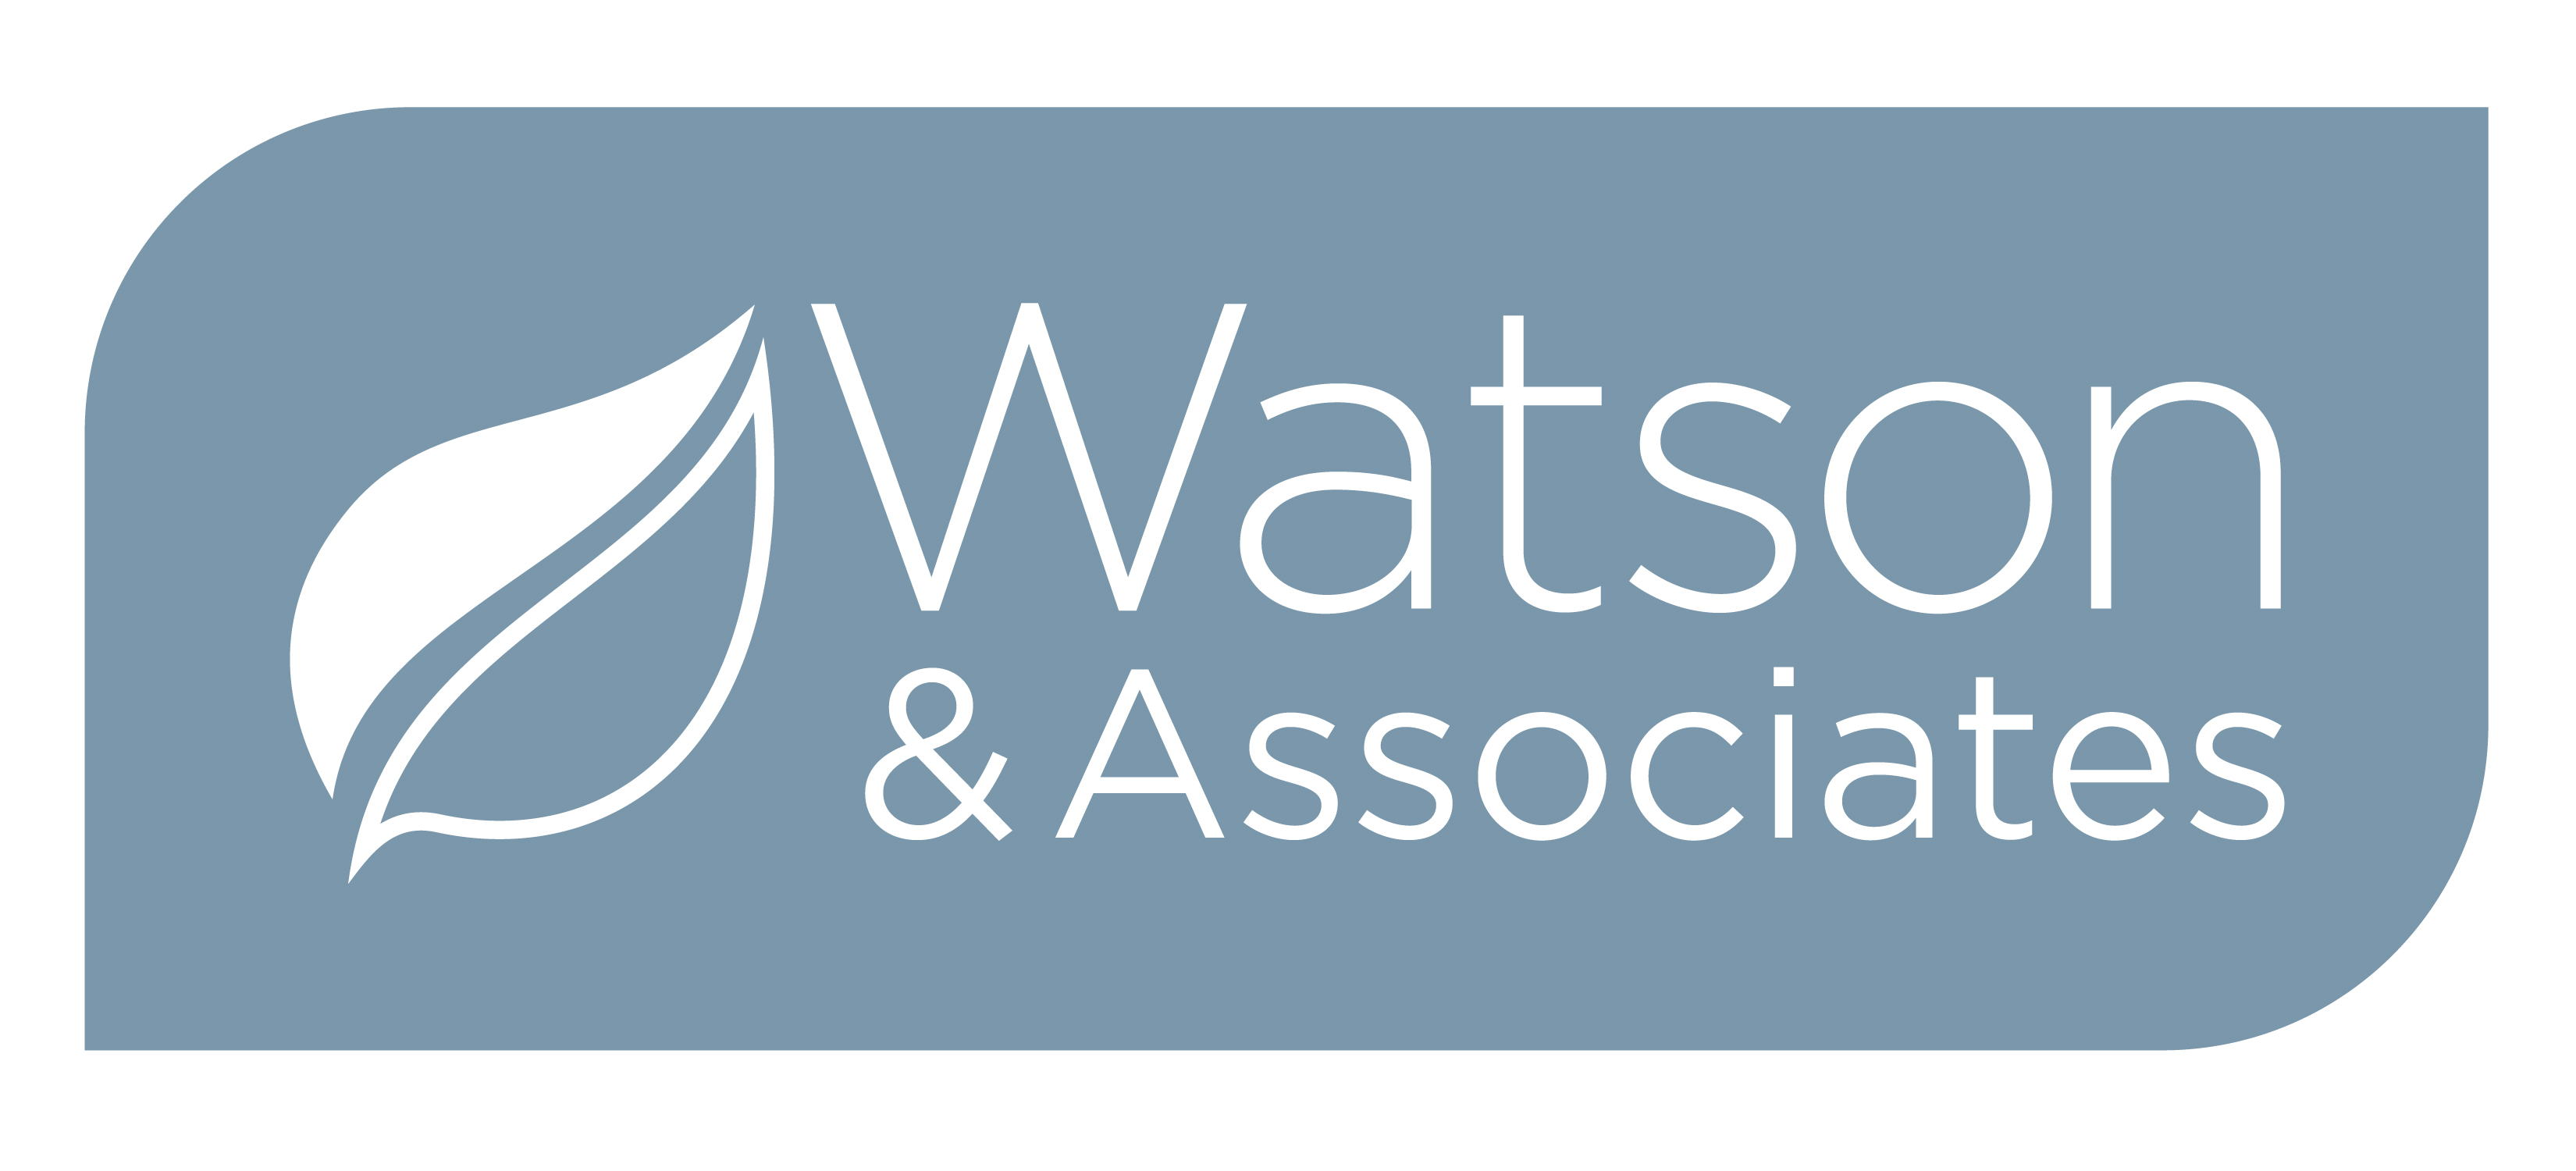 Watson & associates Economists Ltd